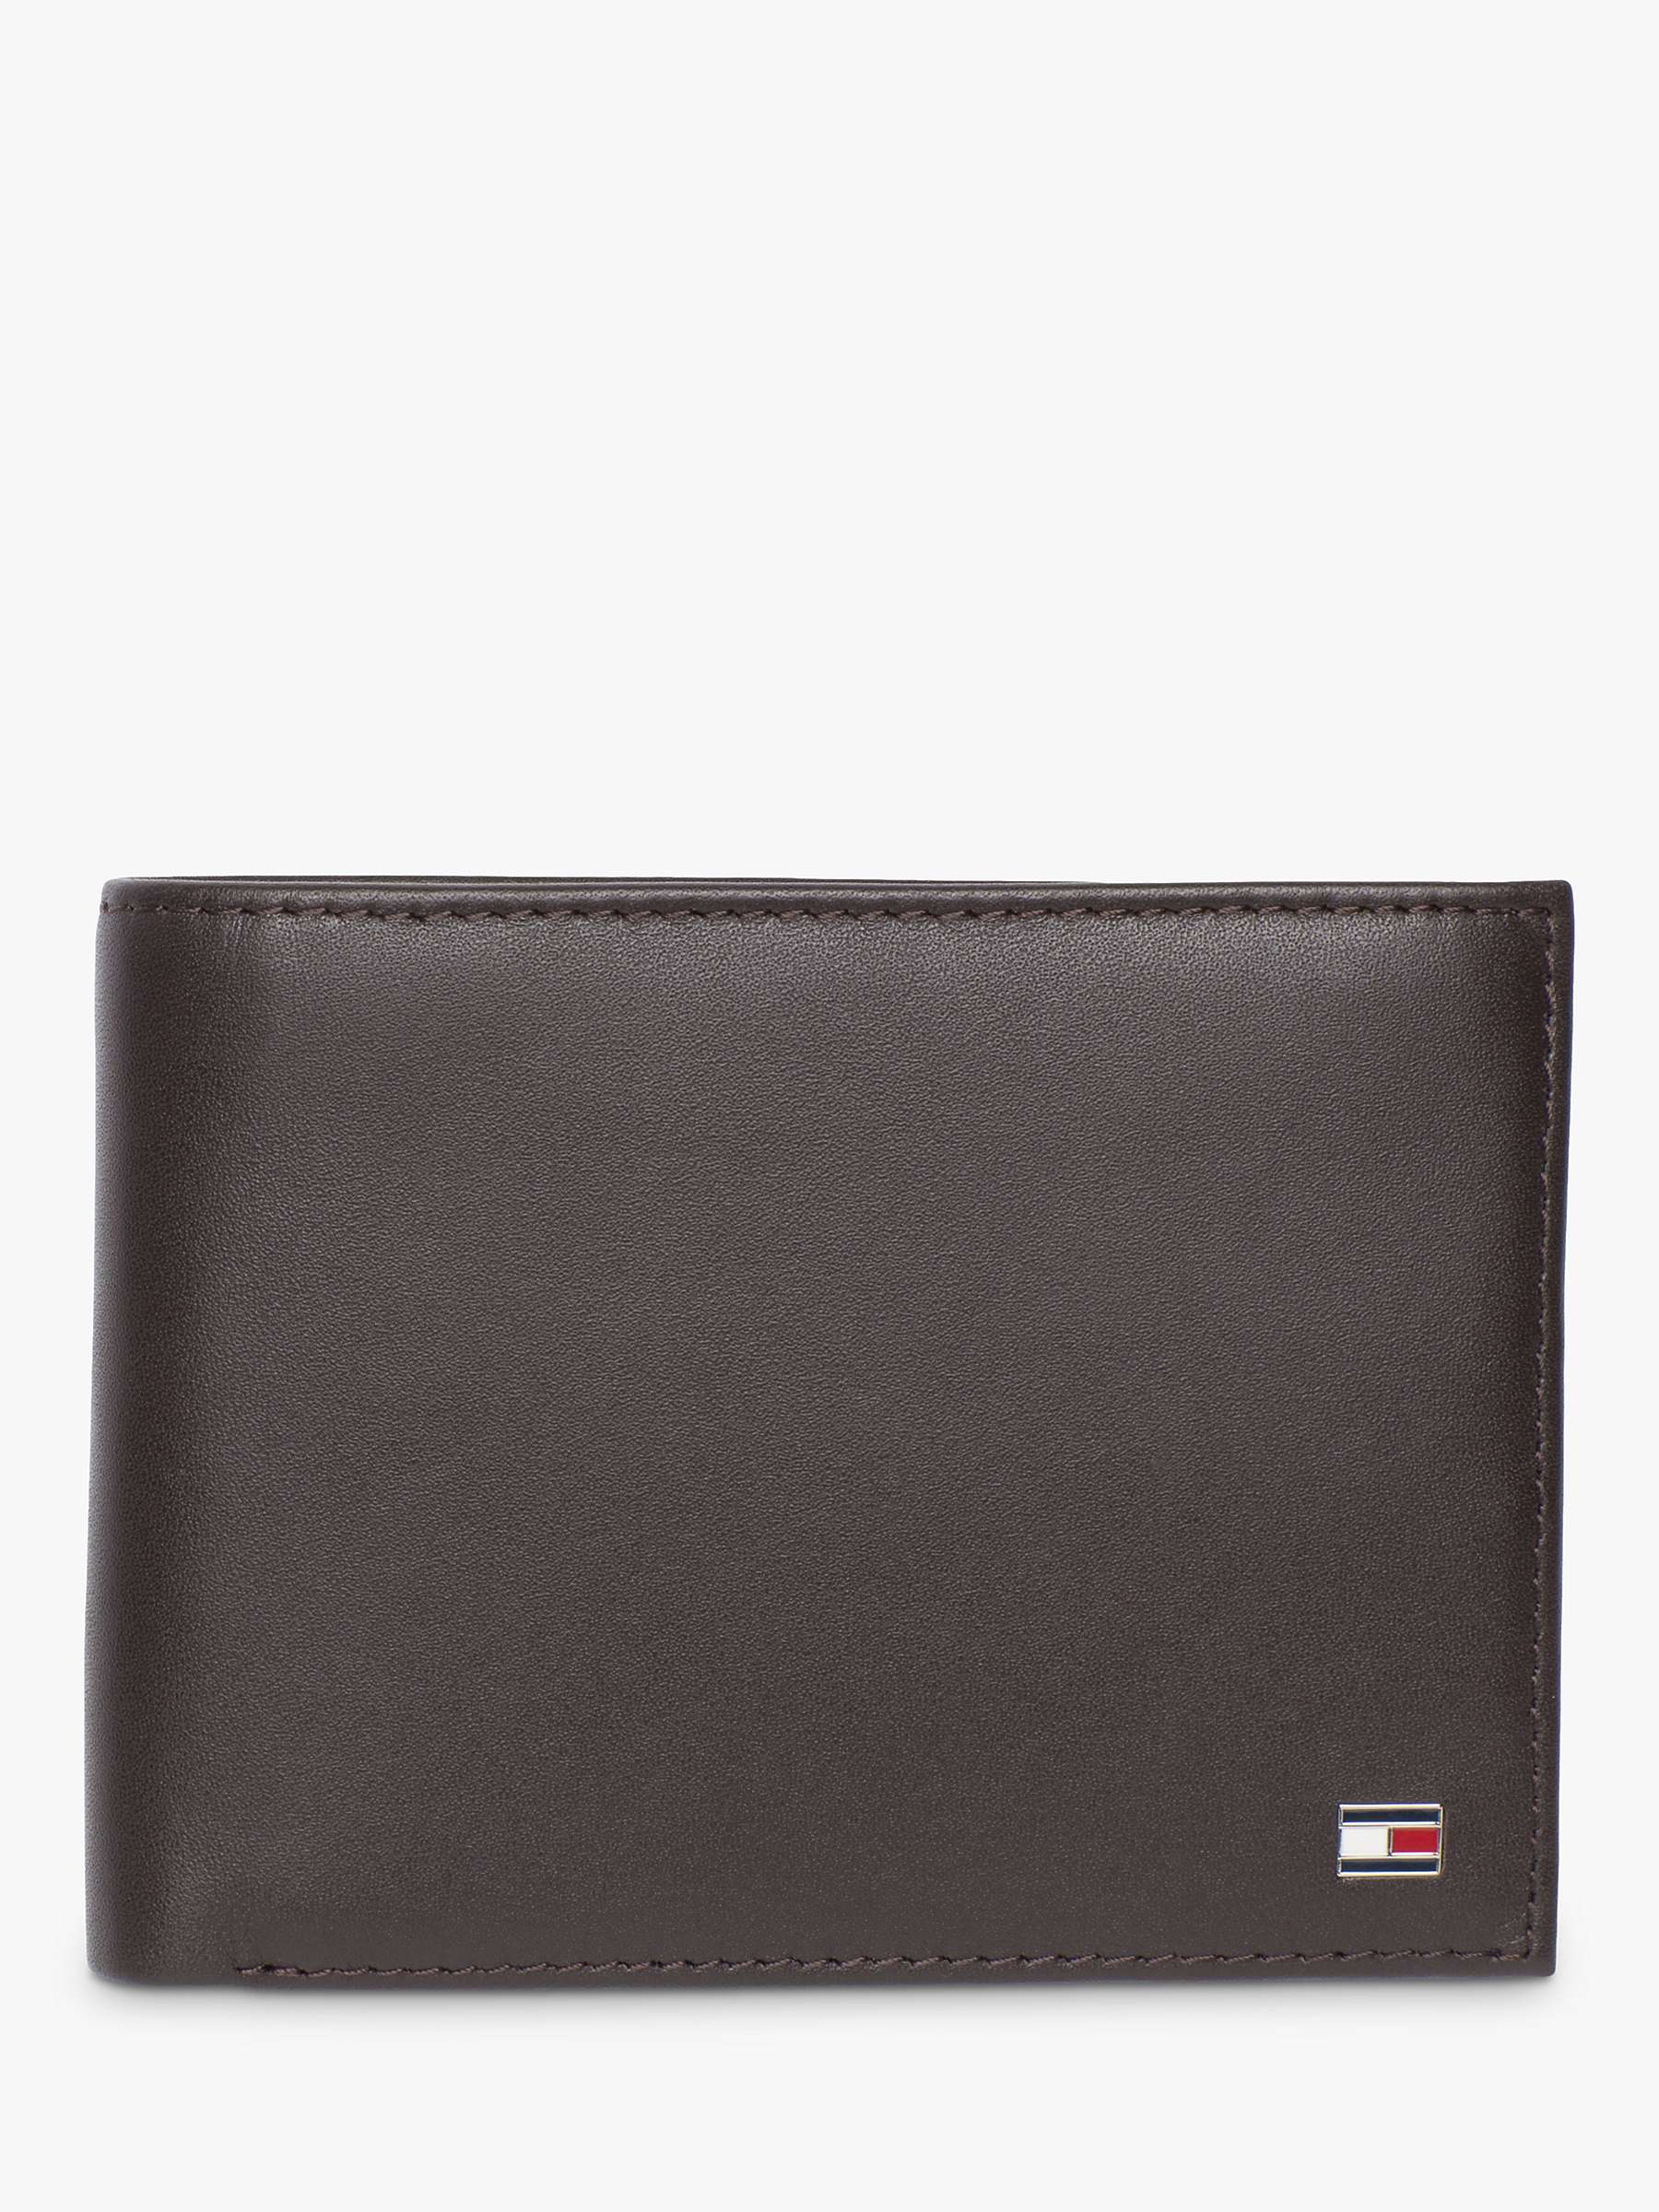 Buy Tommy Hilfiger Eton Leather Flap Coin Wallet Online at johnlewis.com